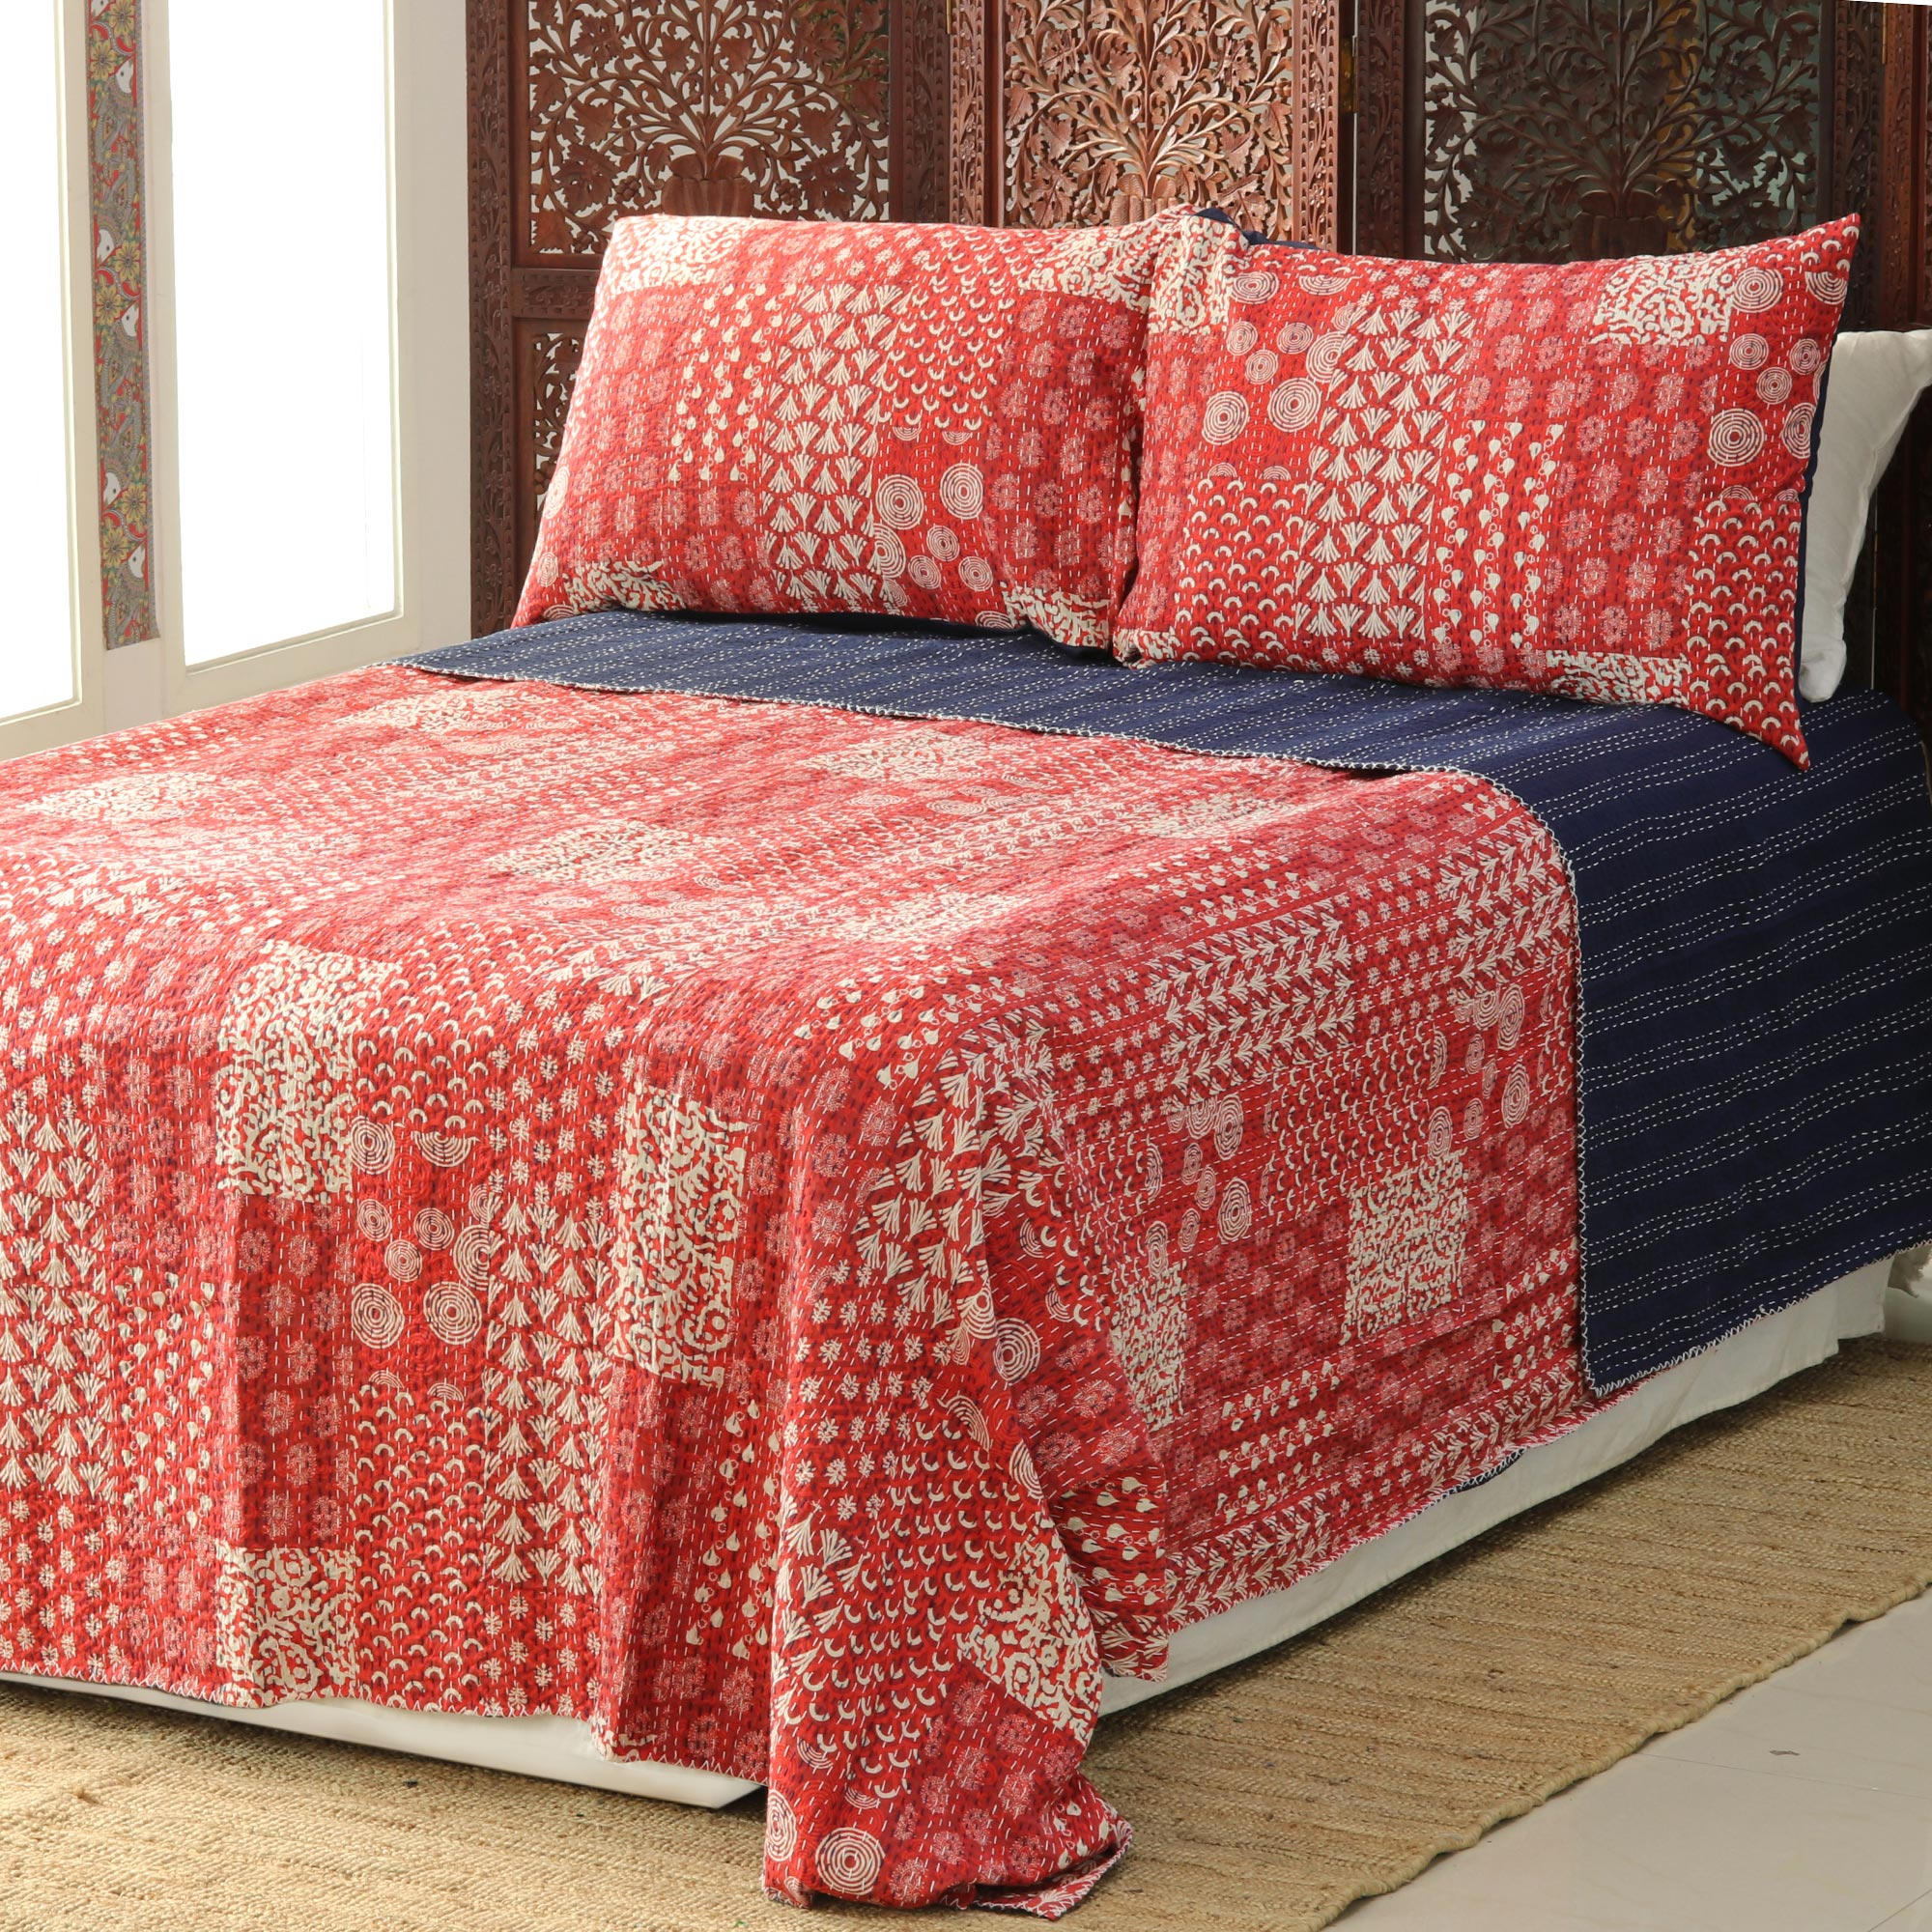 Queen Size Bedsheet Indian bedding set Jaipuri Print Rajasthani Bed Set Pillow Cases Soft 3 Pcs Bedspread Comfortable Handprinted Tapestry